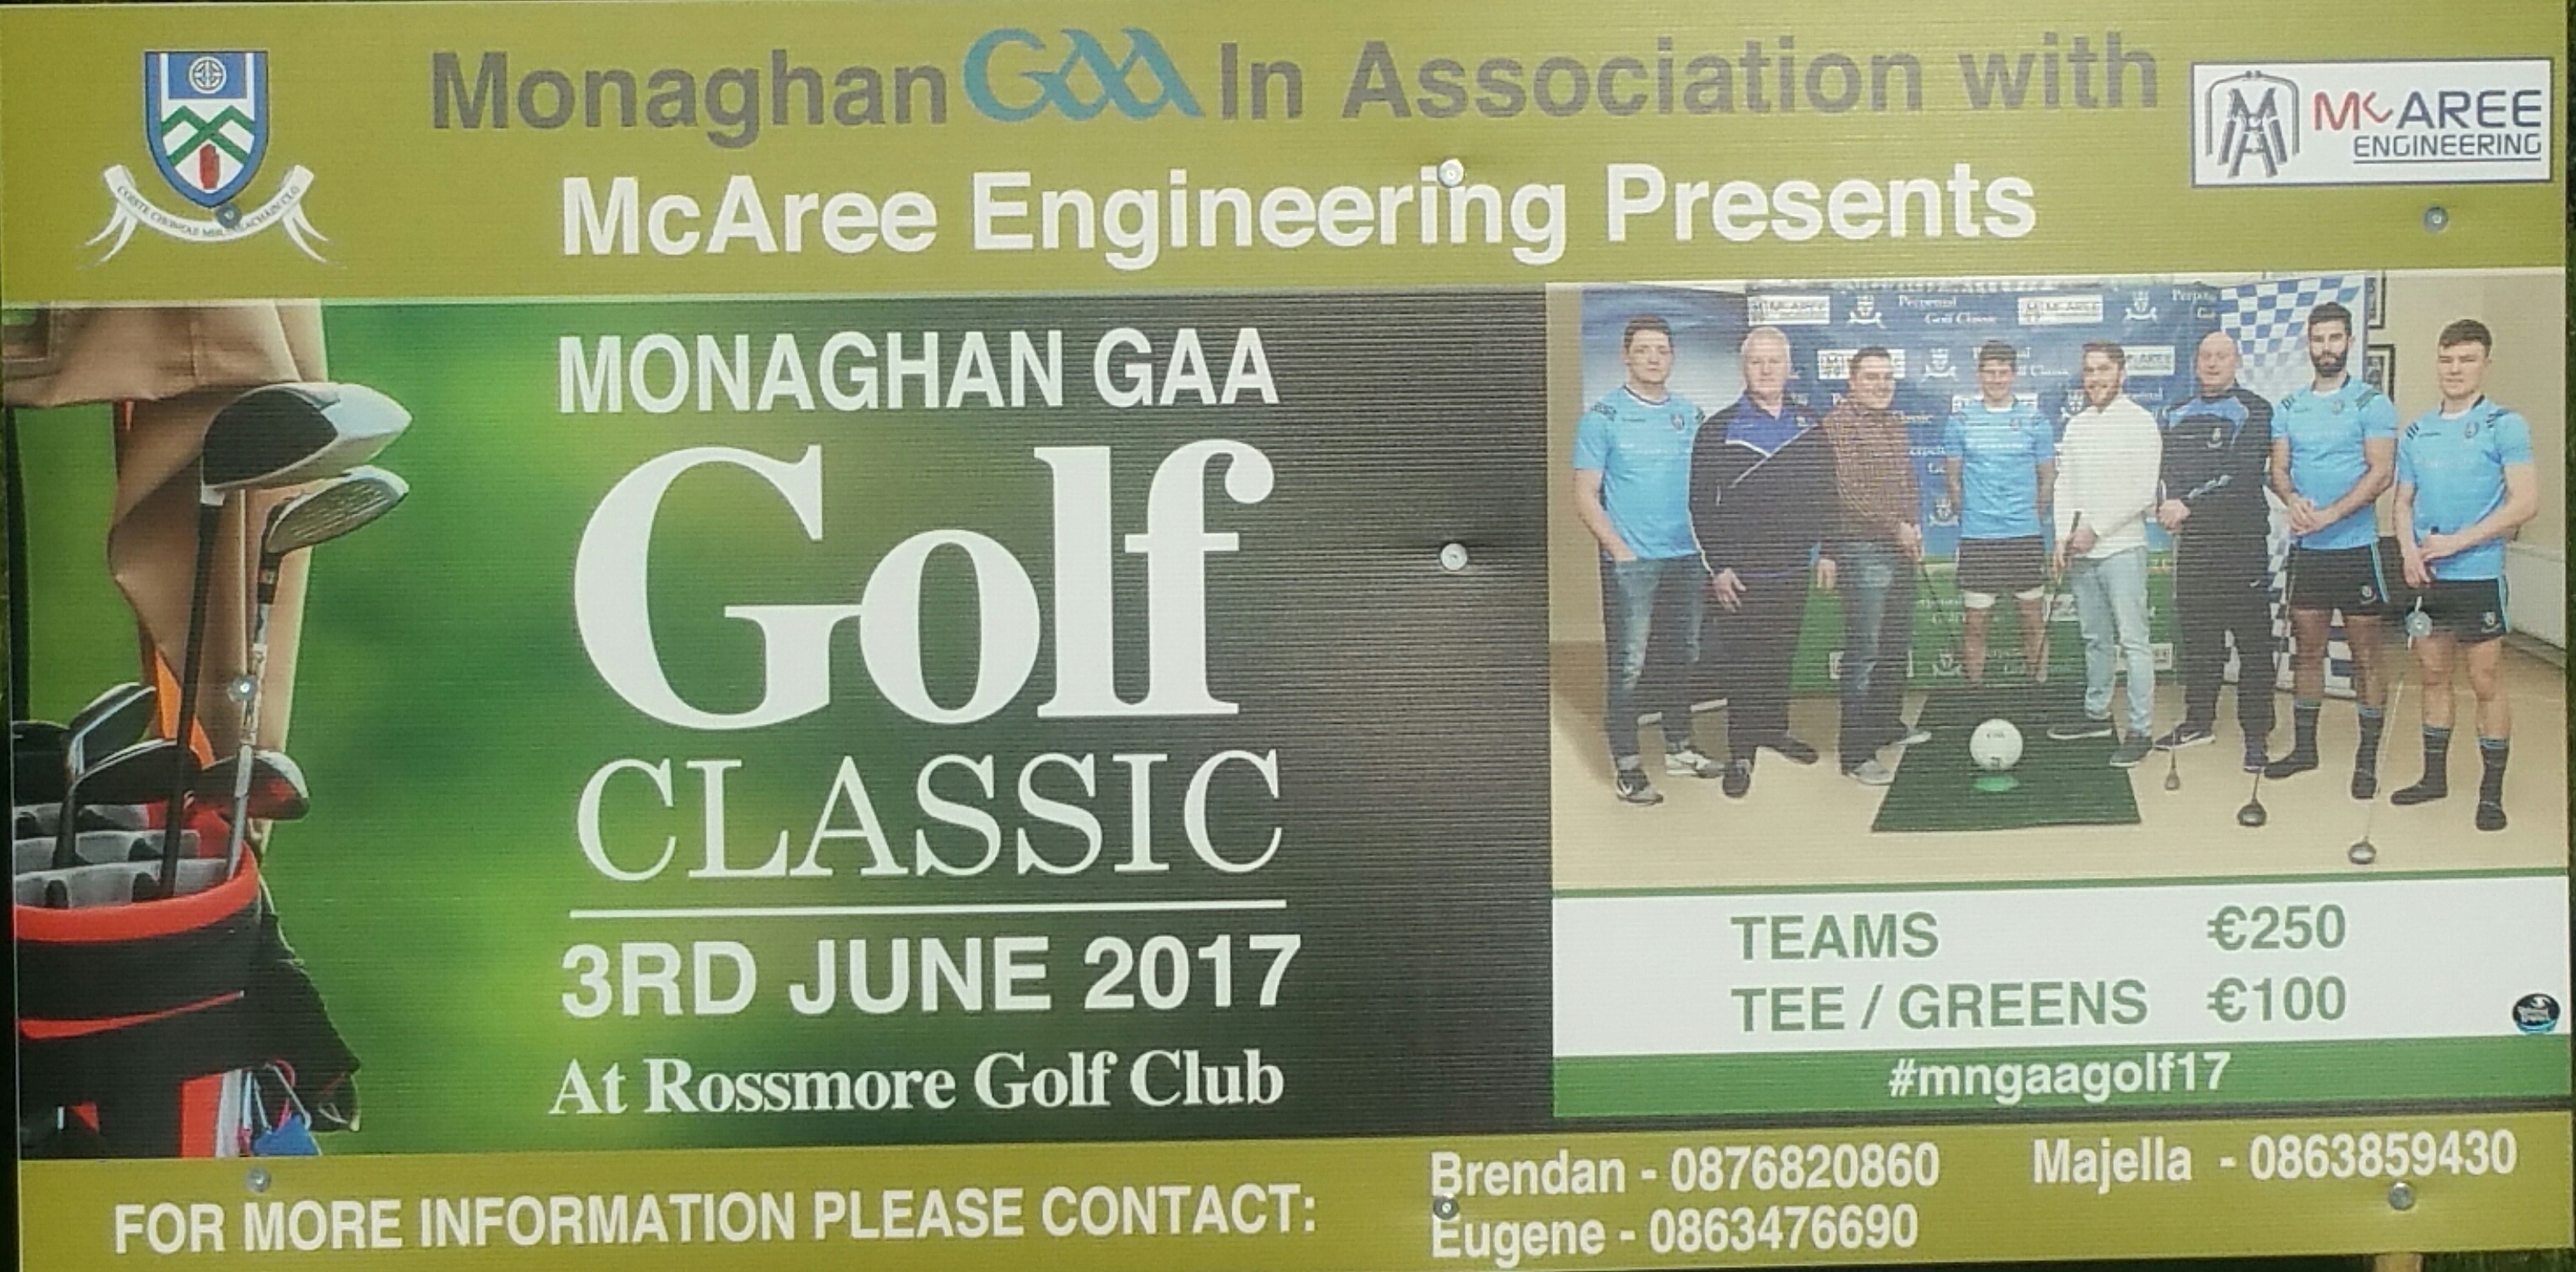 Mc Aree Engineering Monaghan GAA Golf Classic this Saturday